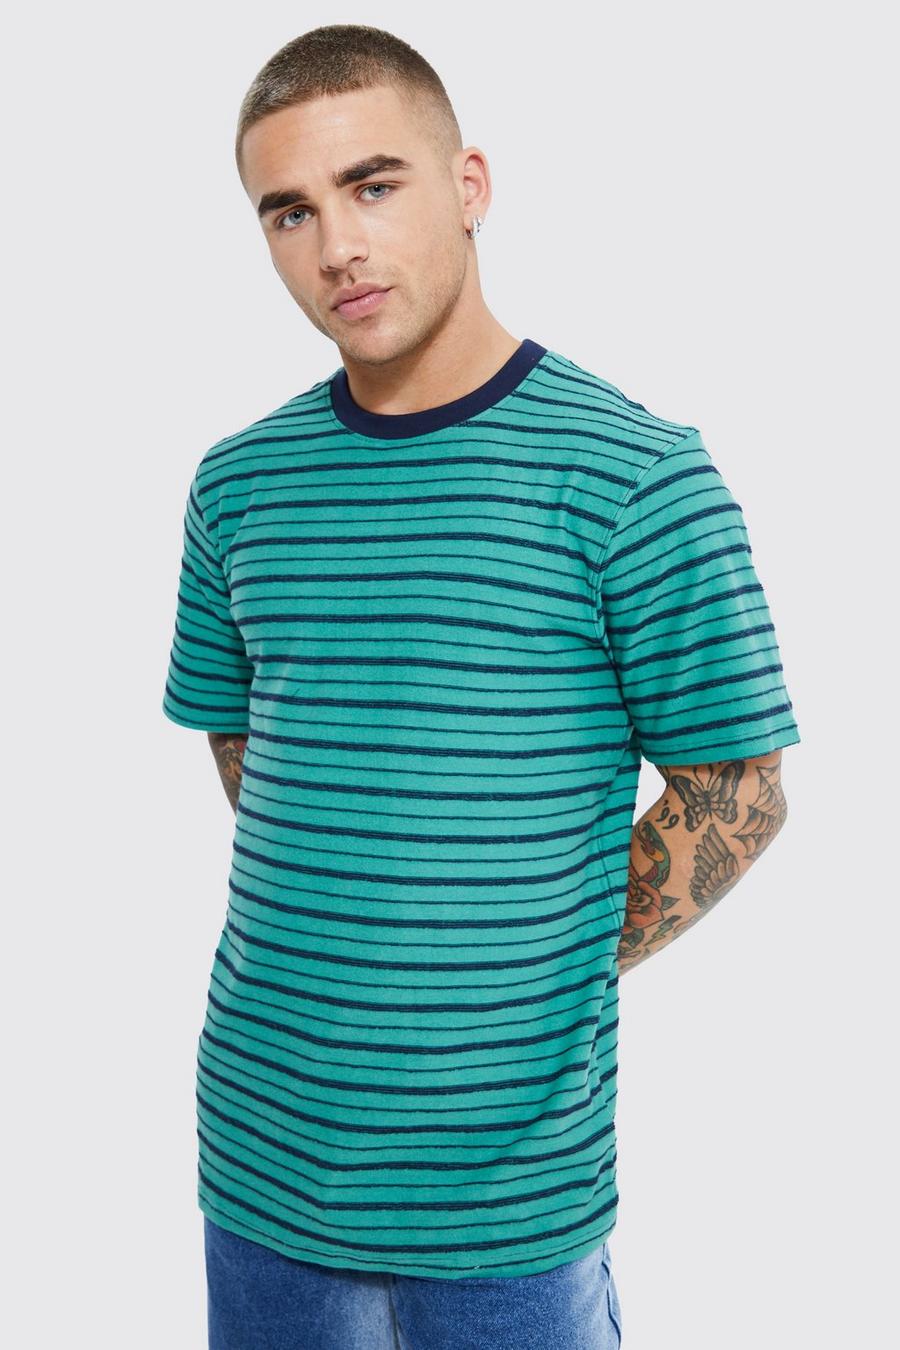 T-shirt oversize à rayures horizontales larges avec coupe